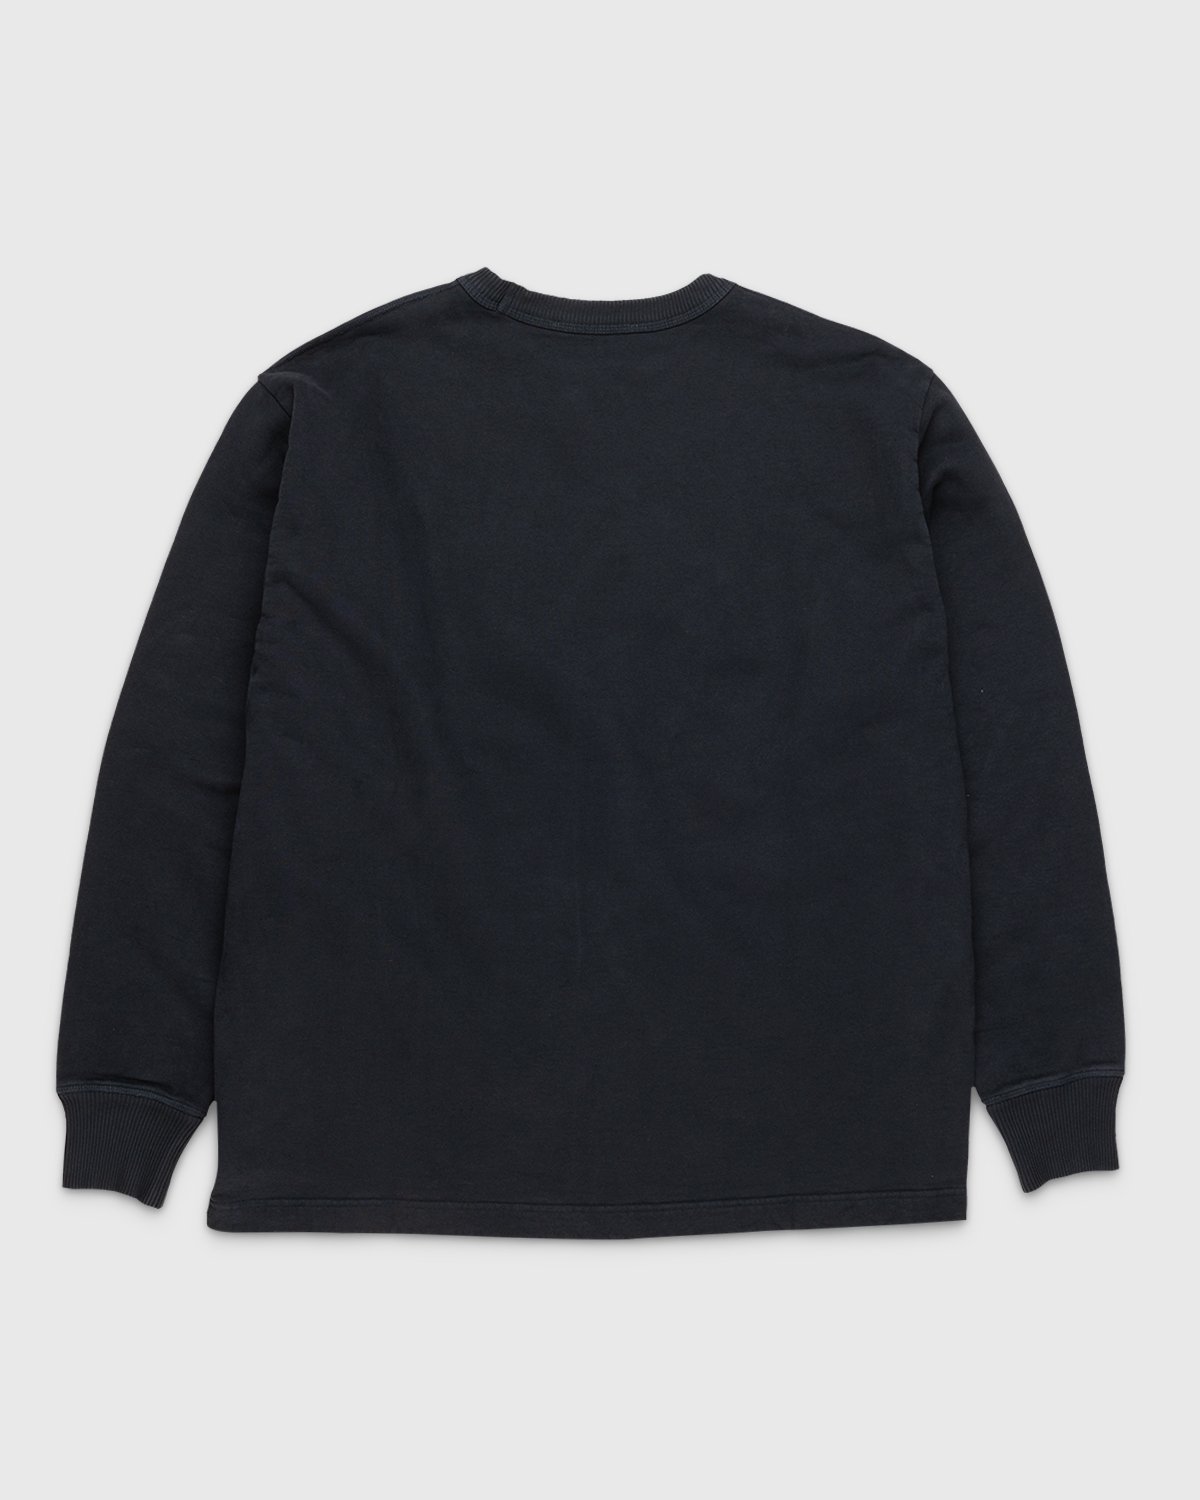 Acne Studios - Organic Cotton Logo Crewneck Sweatshirt Black - Clothing - Black - Image 2